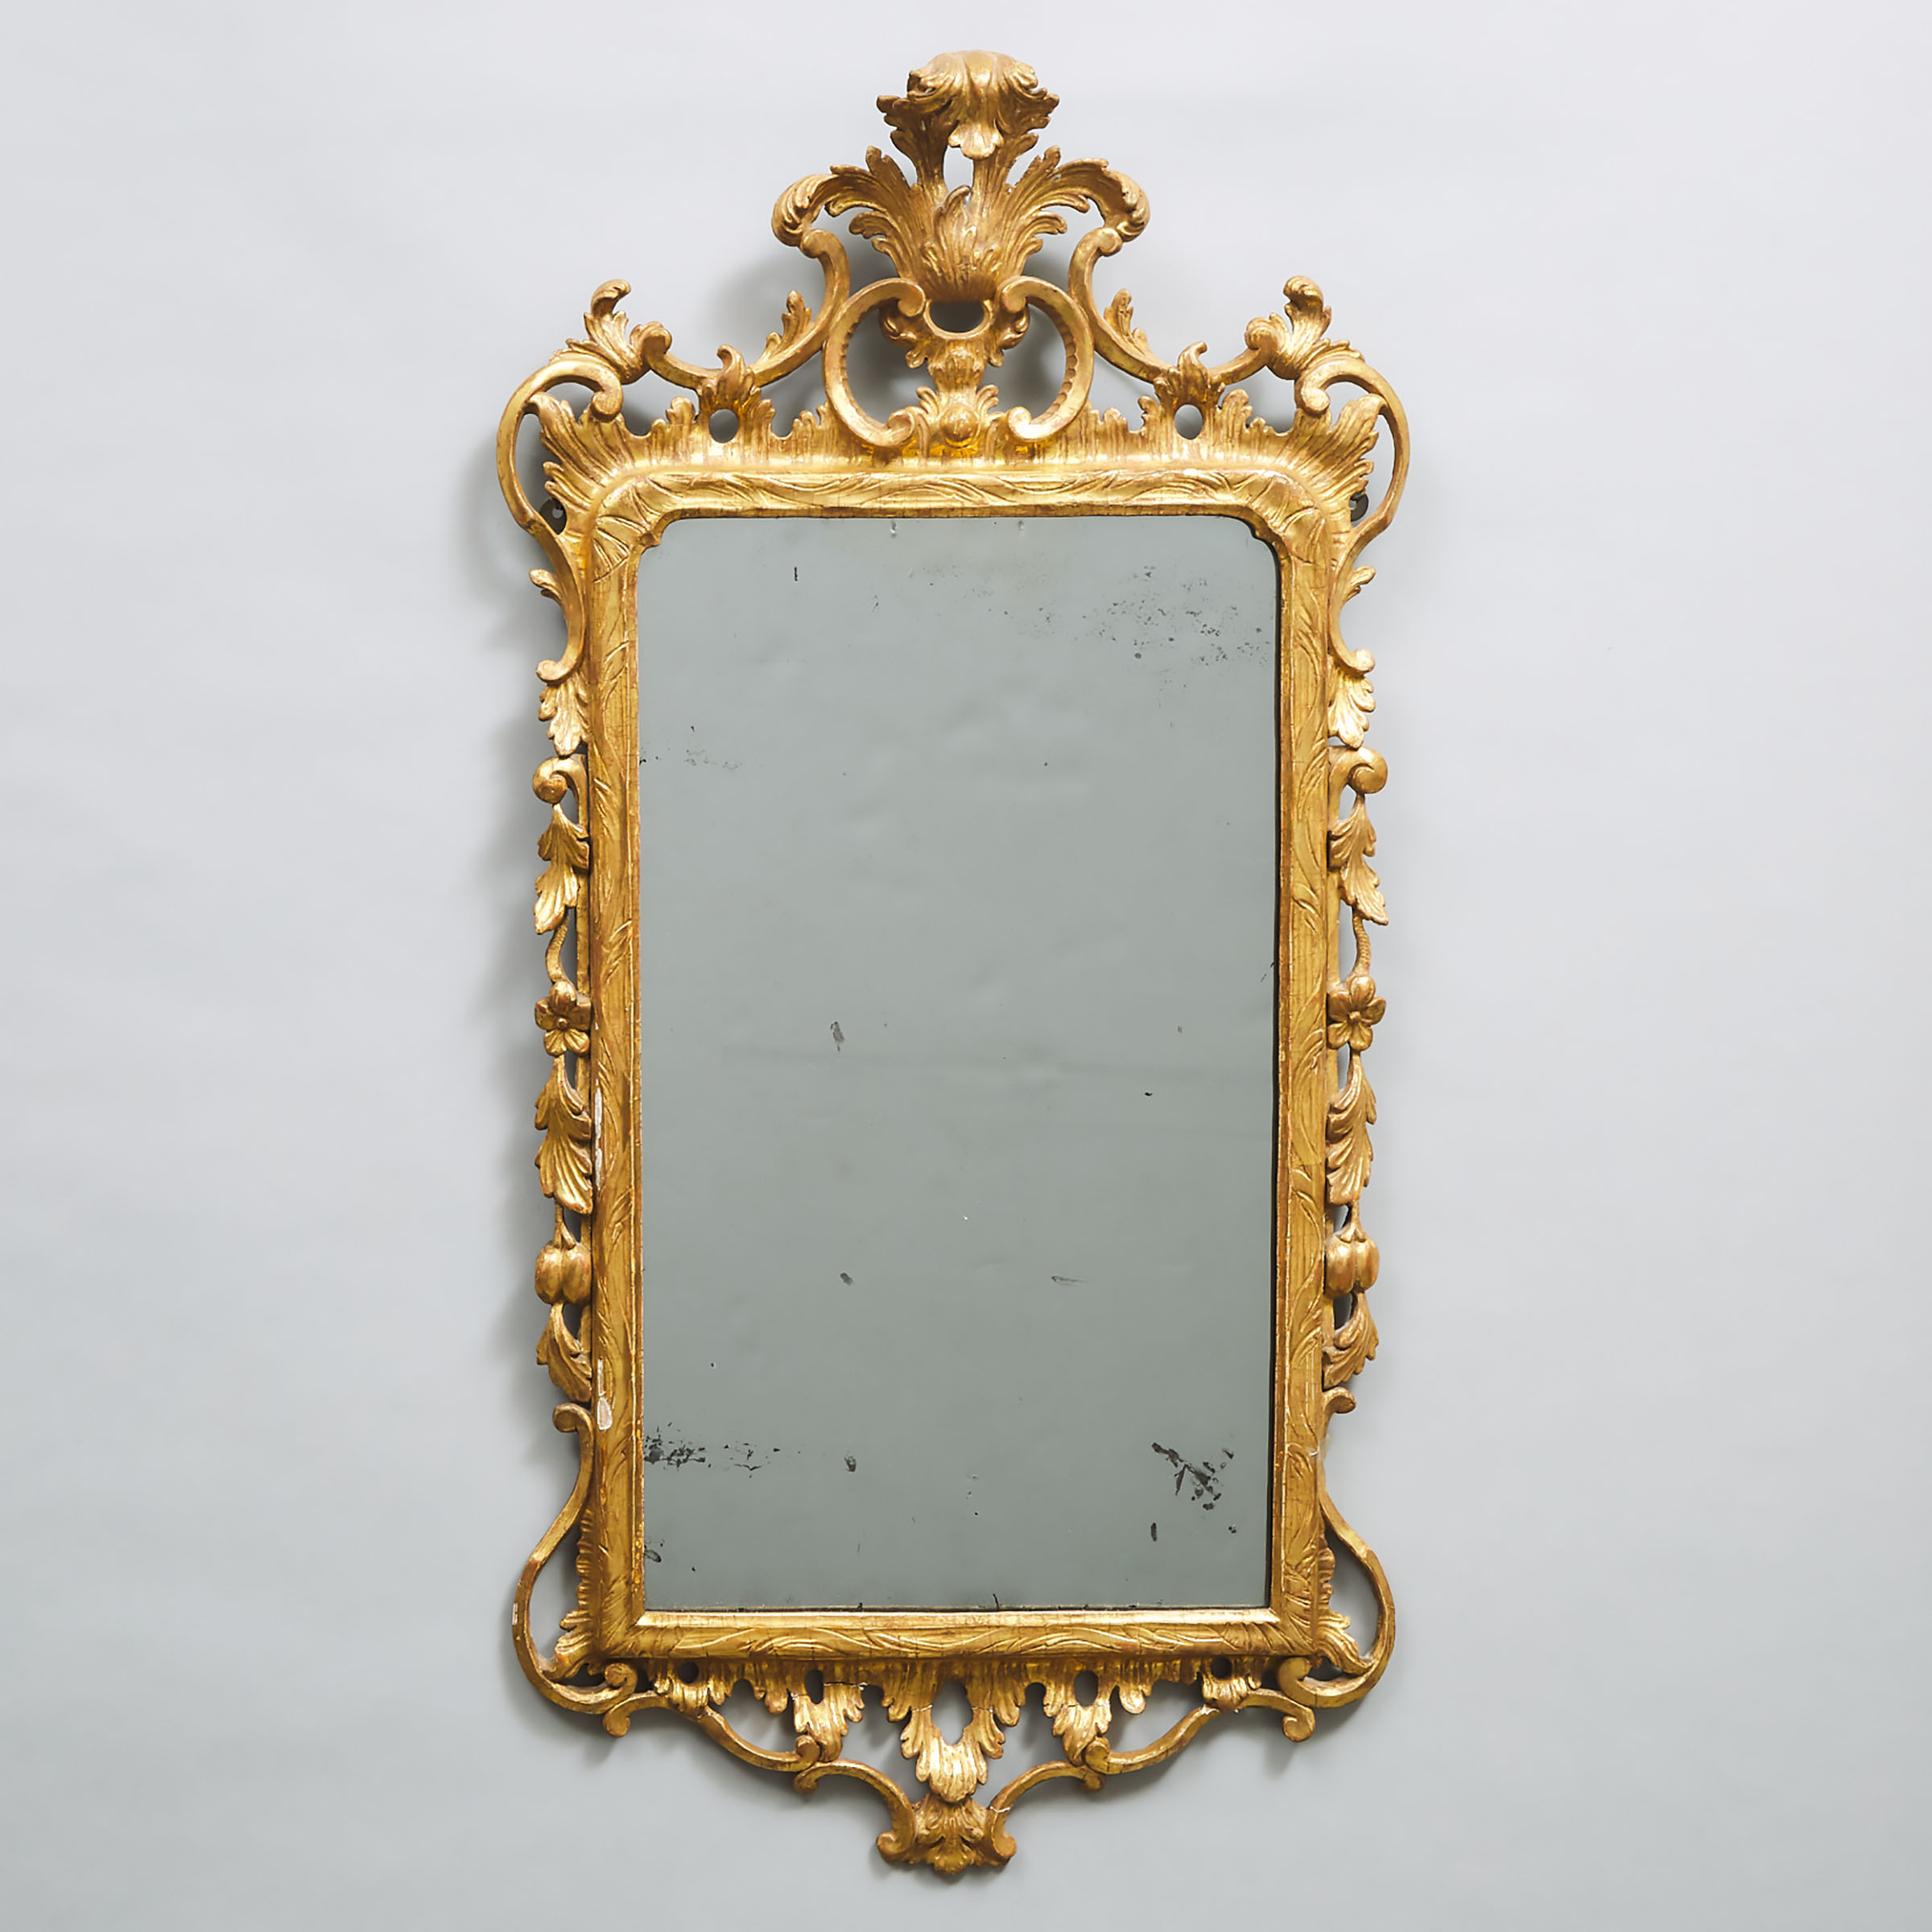 George III Giltwood Mirror, c.1770